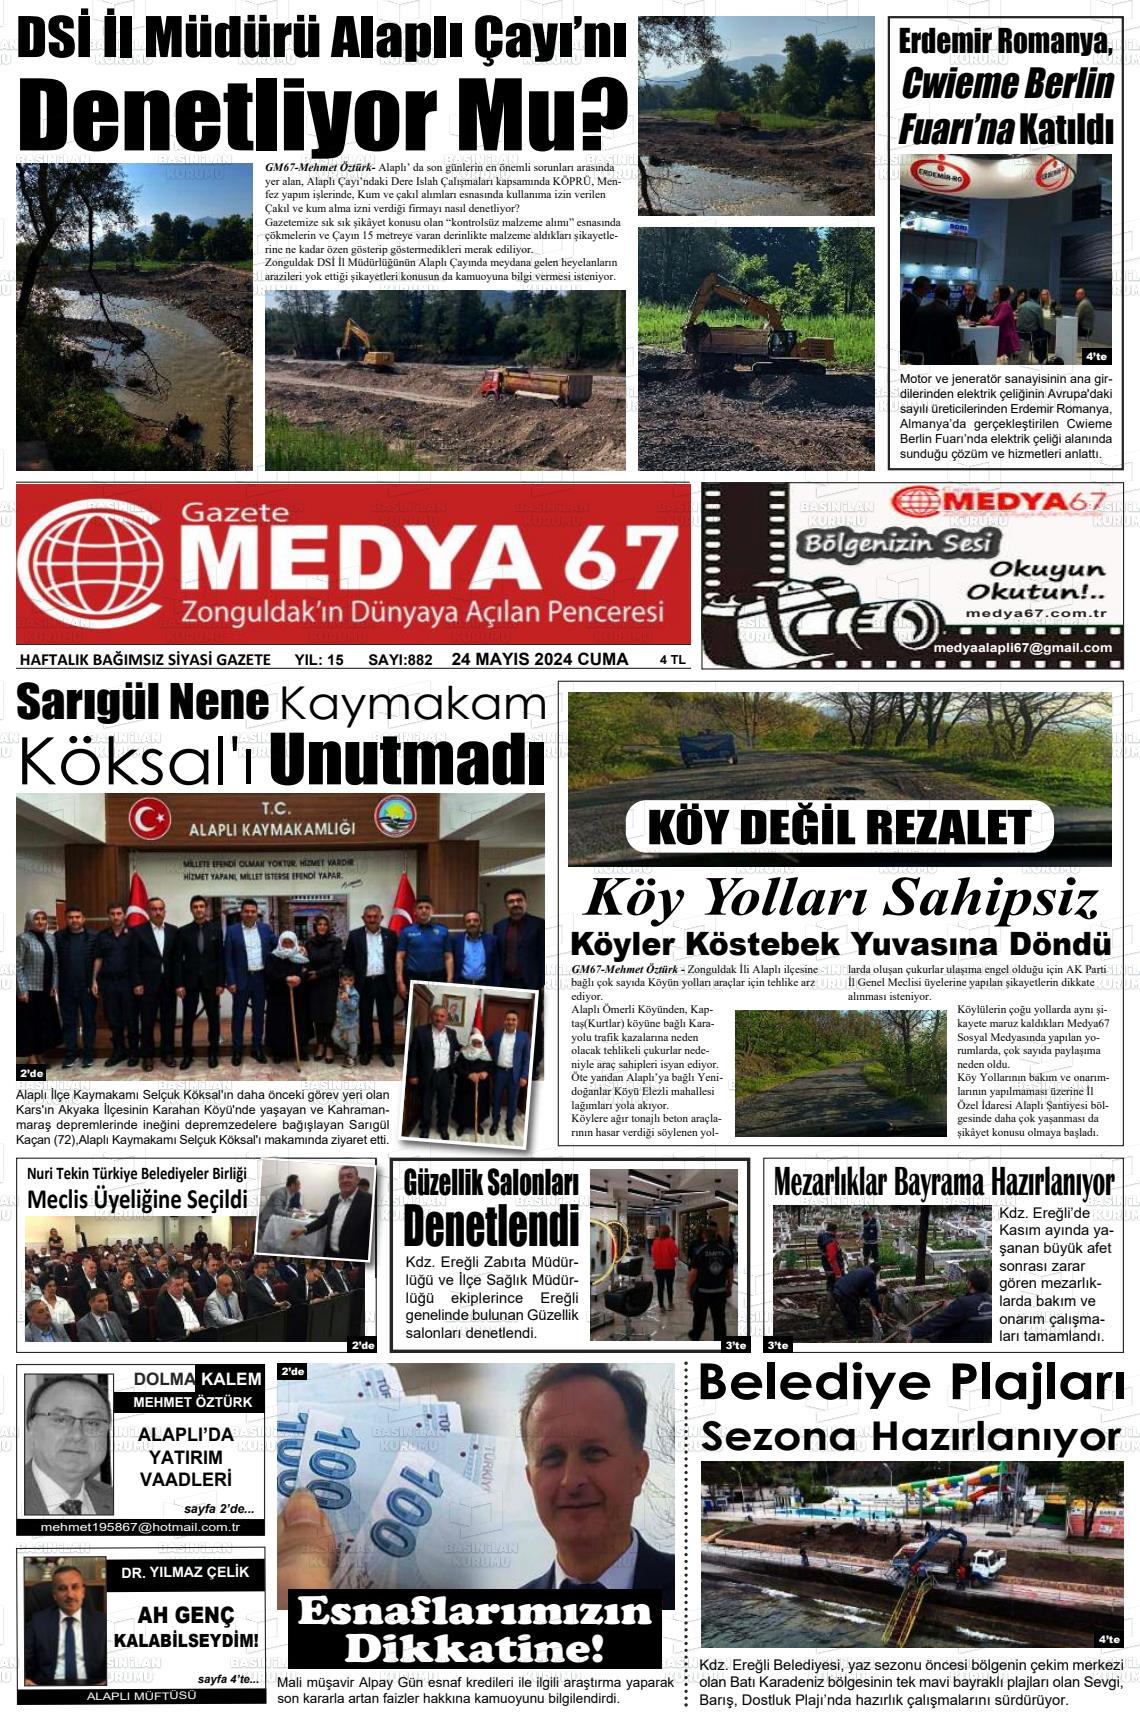 MEDYA 67 Gazetesi